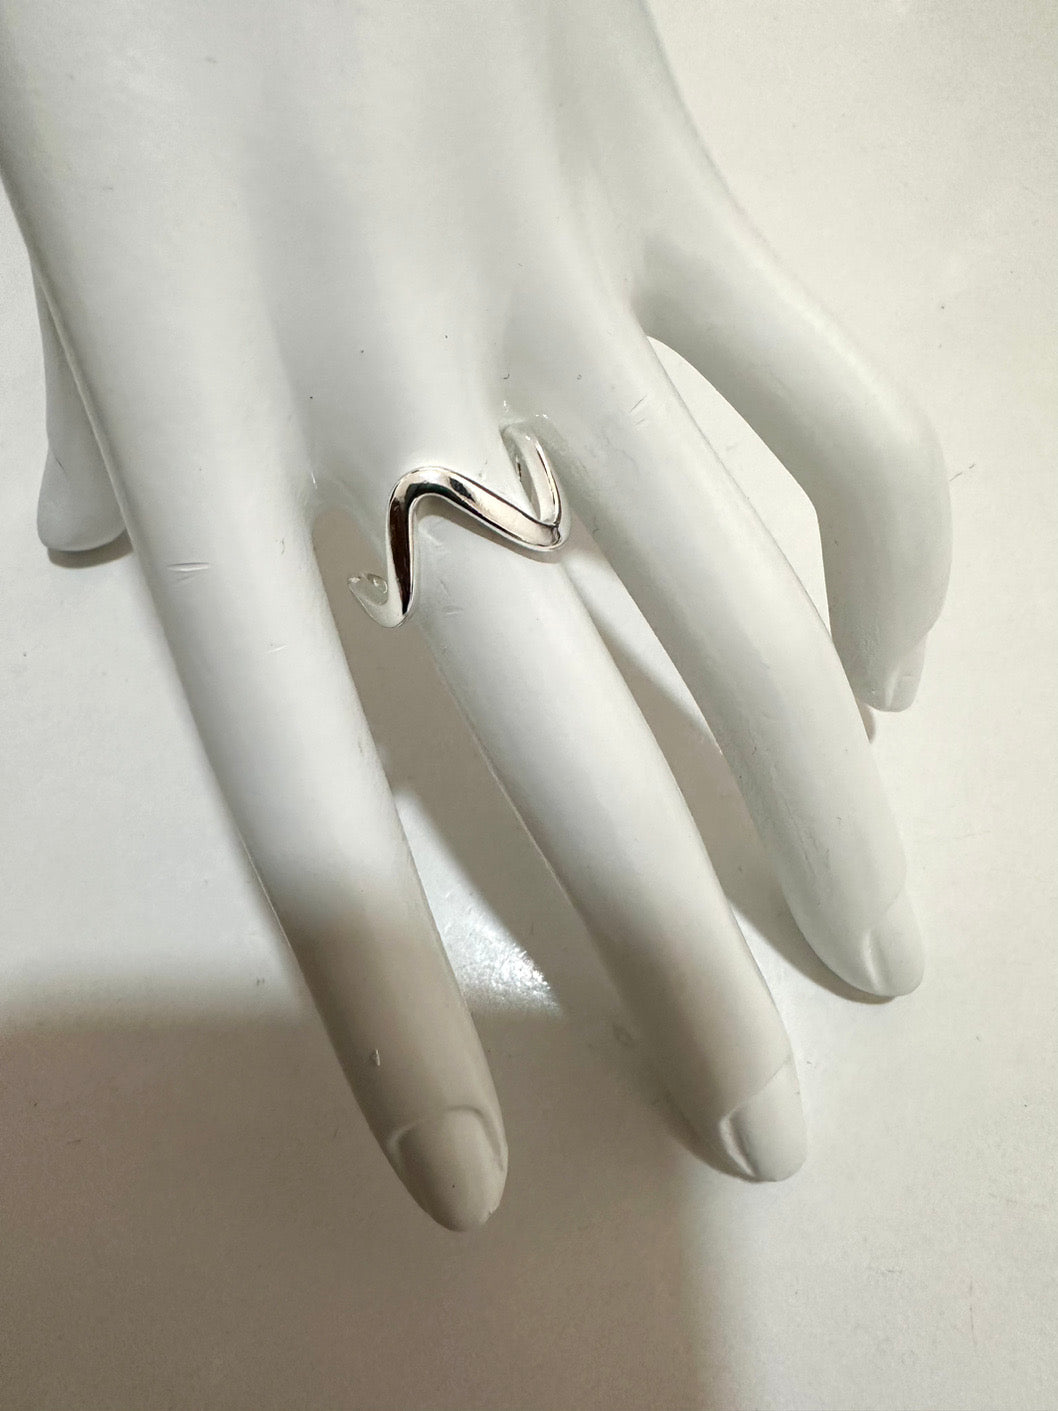 Silver irregular ring